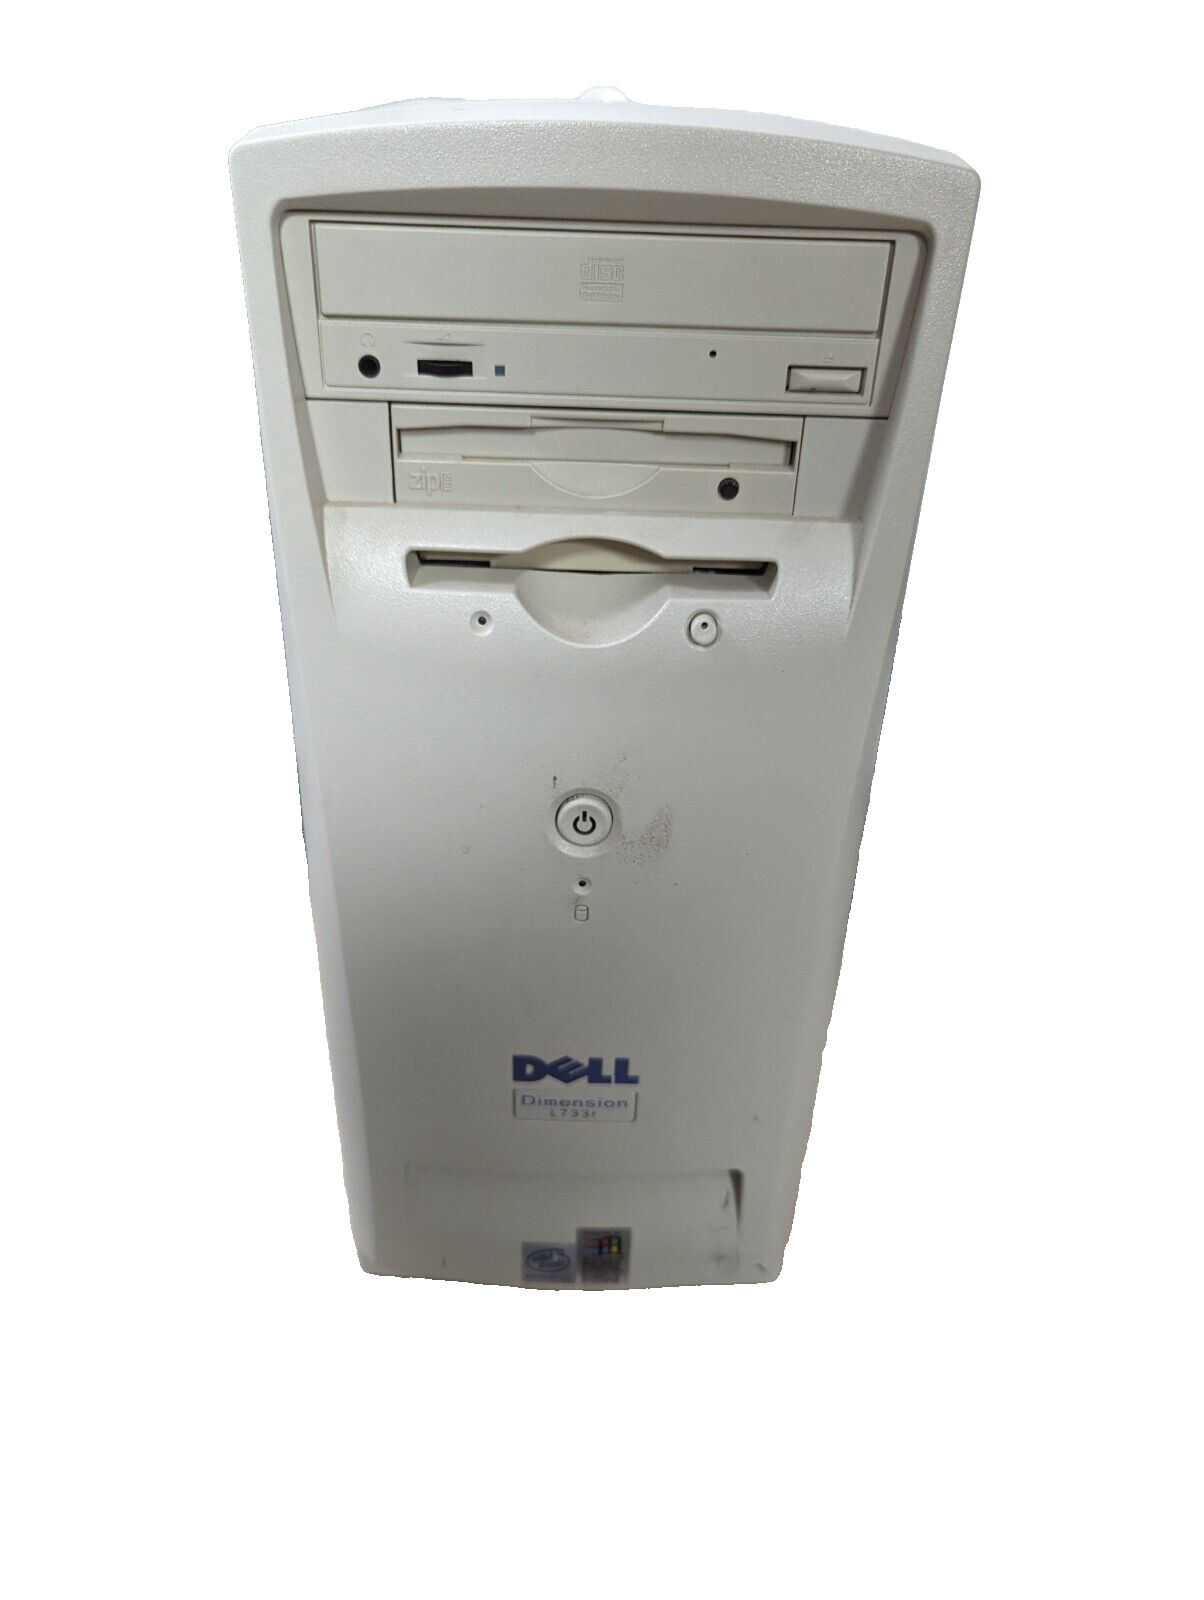 Vintage Dell Dimension L733R Desktop Computer Pentium 3 III Zip 100  PC